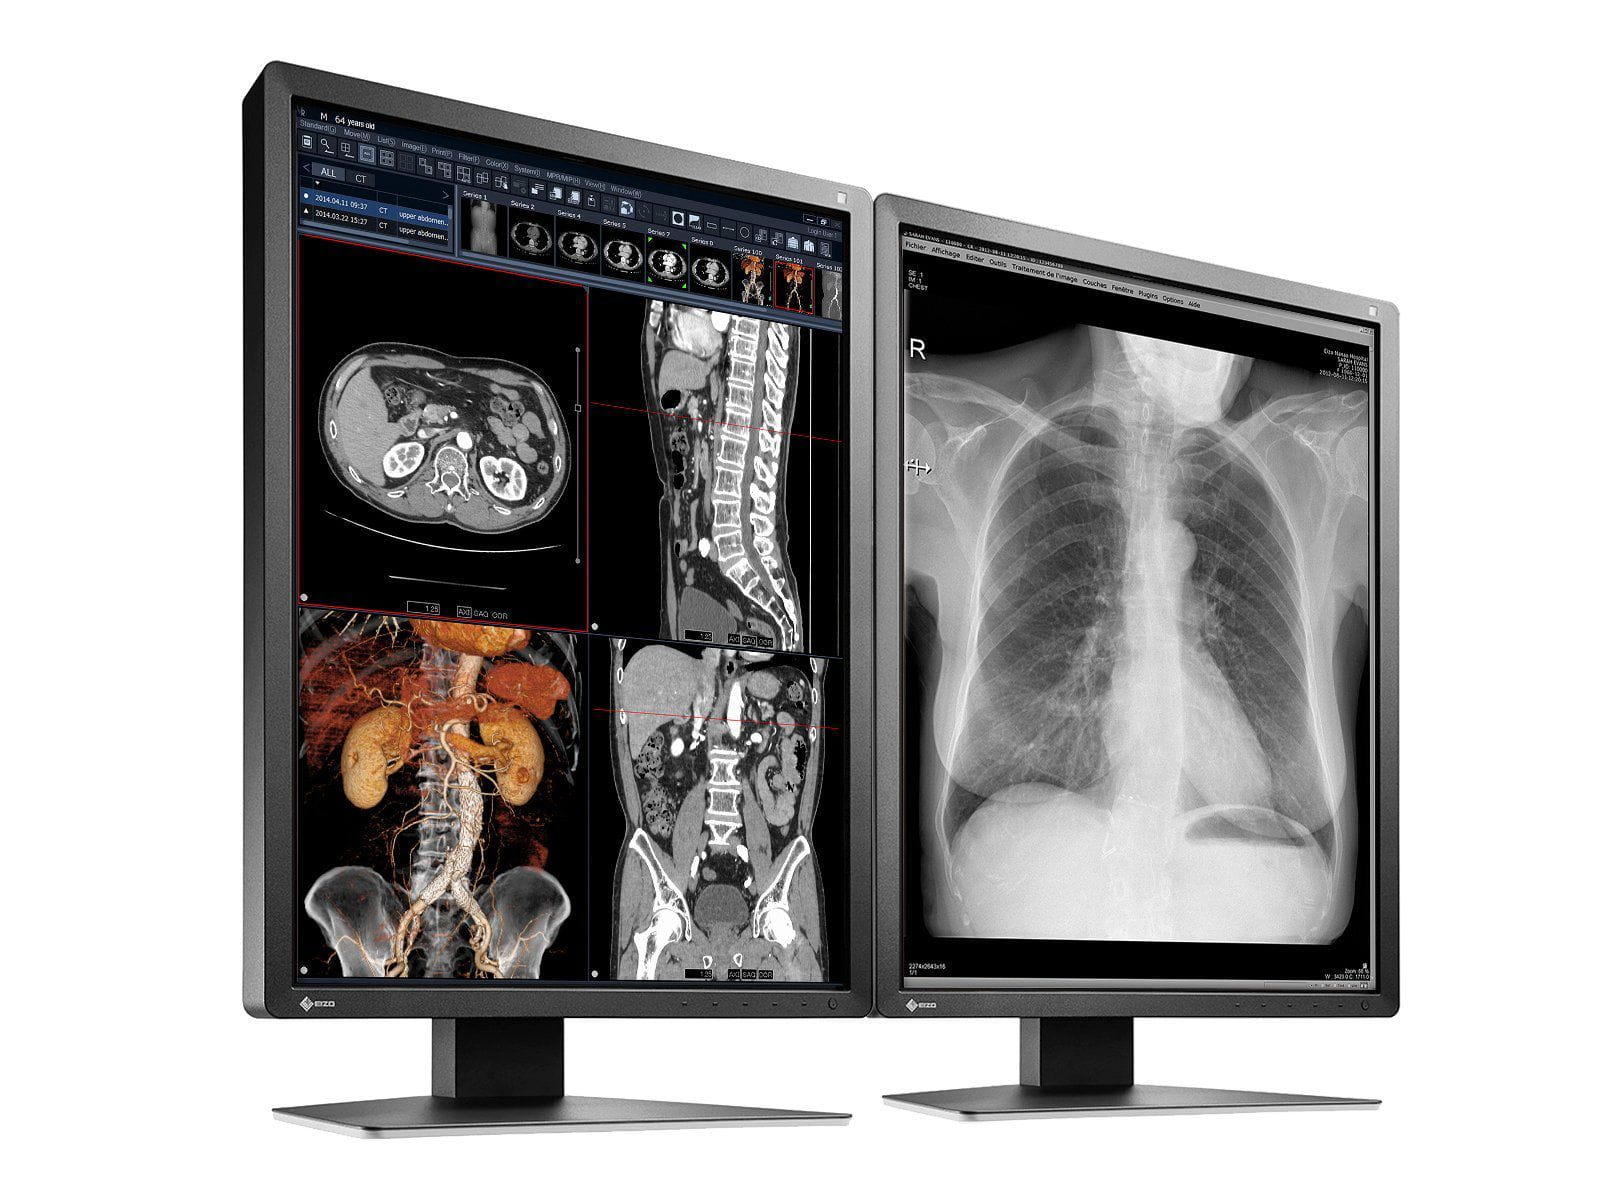 Eizo RadiForce MX216 2MP 21" Color LED Medical Display Monitor (MX216-BK) Monitors.com 